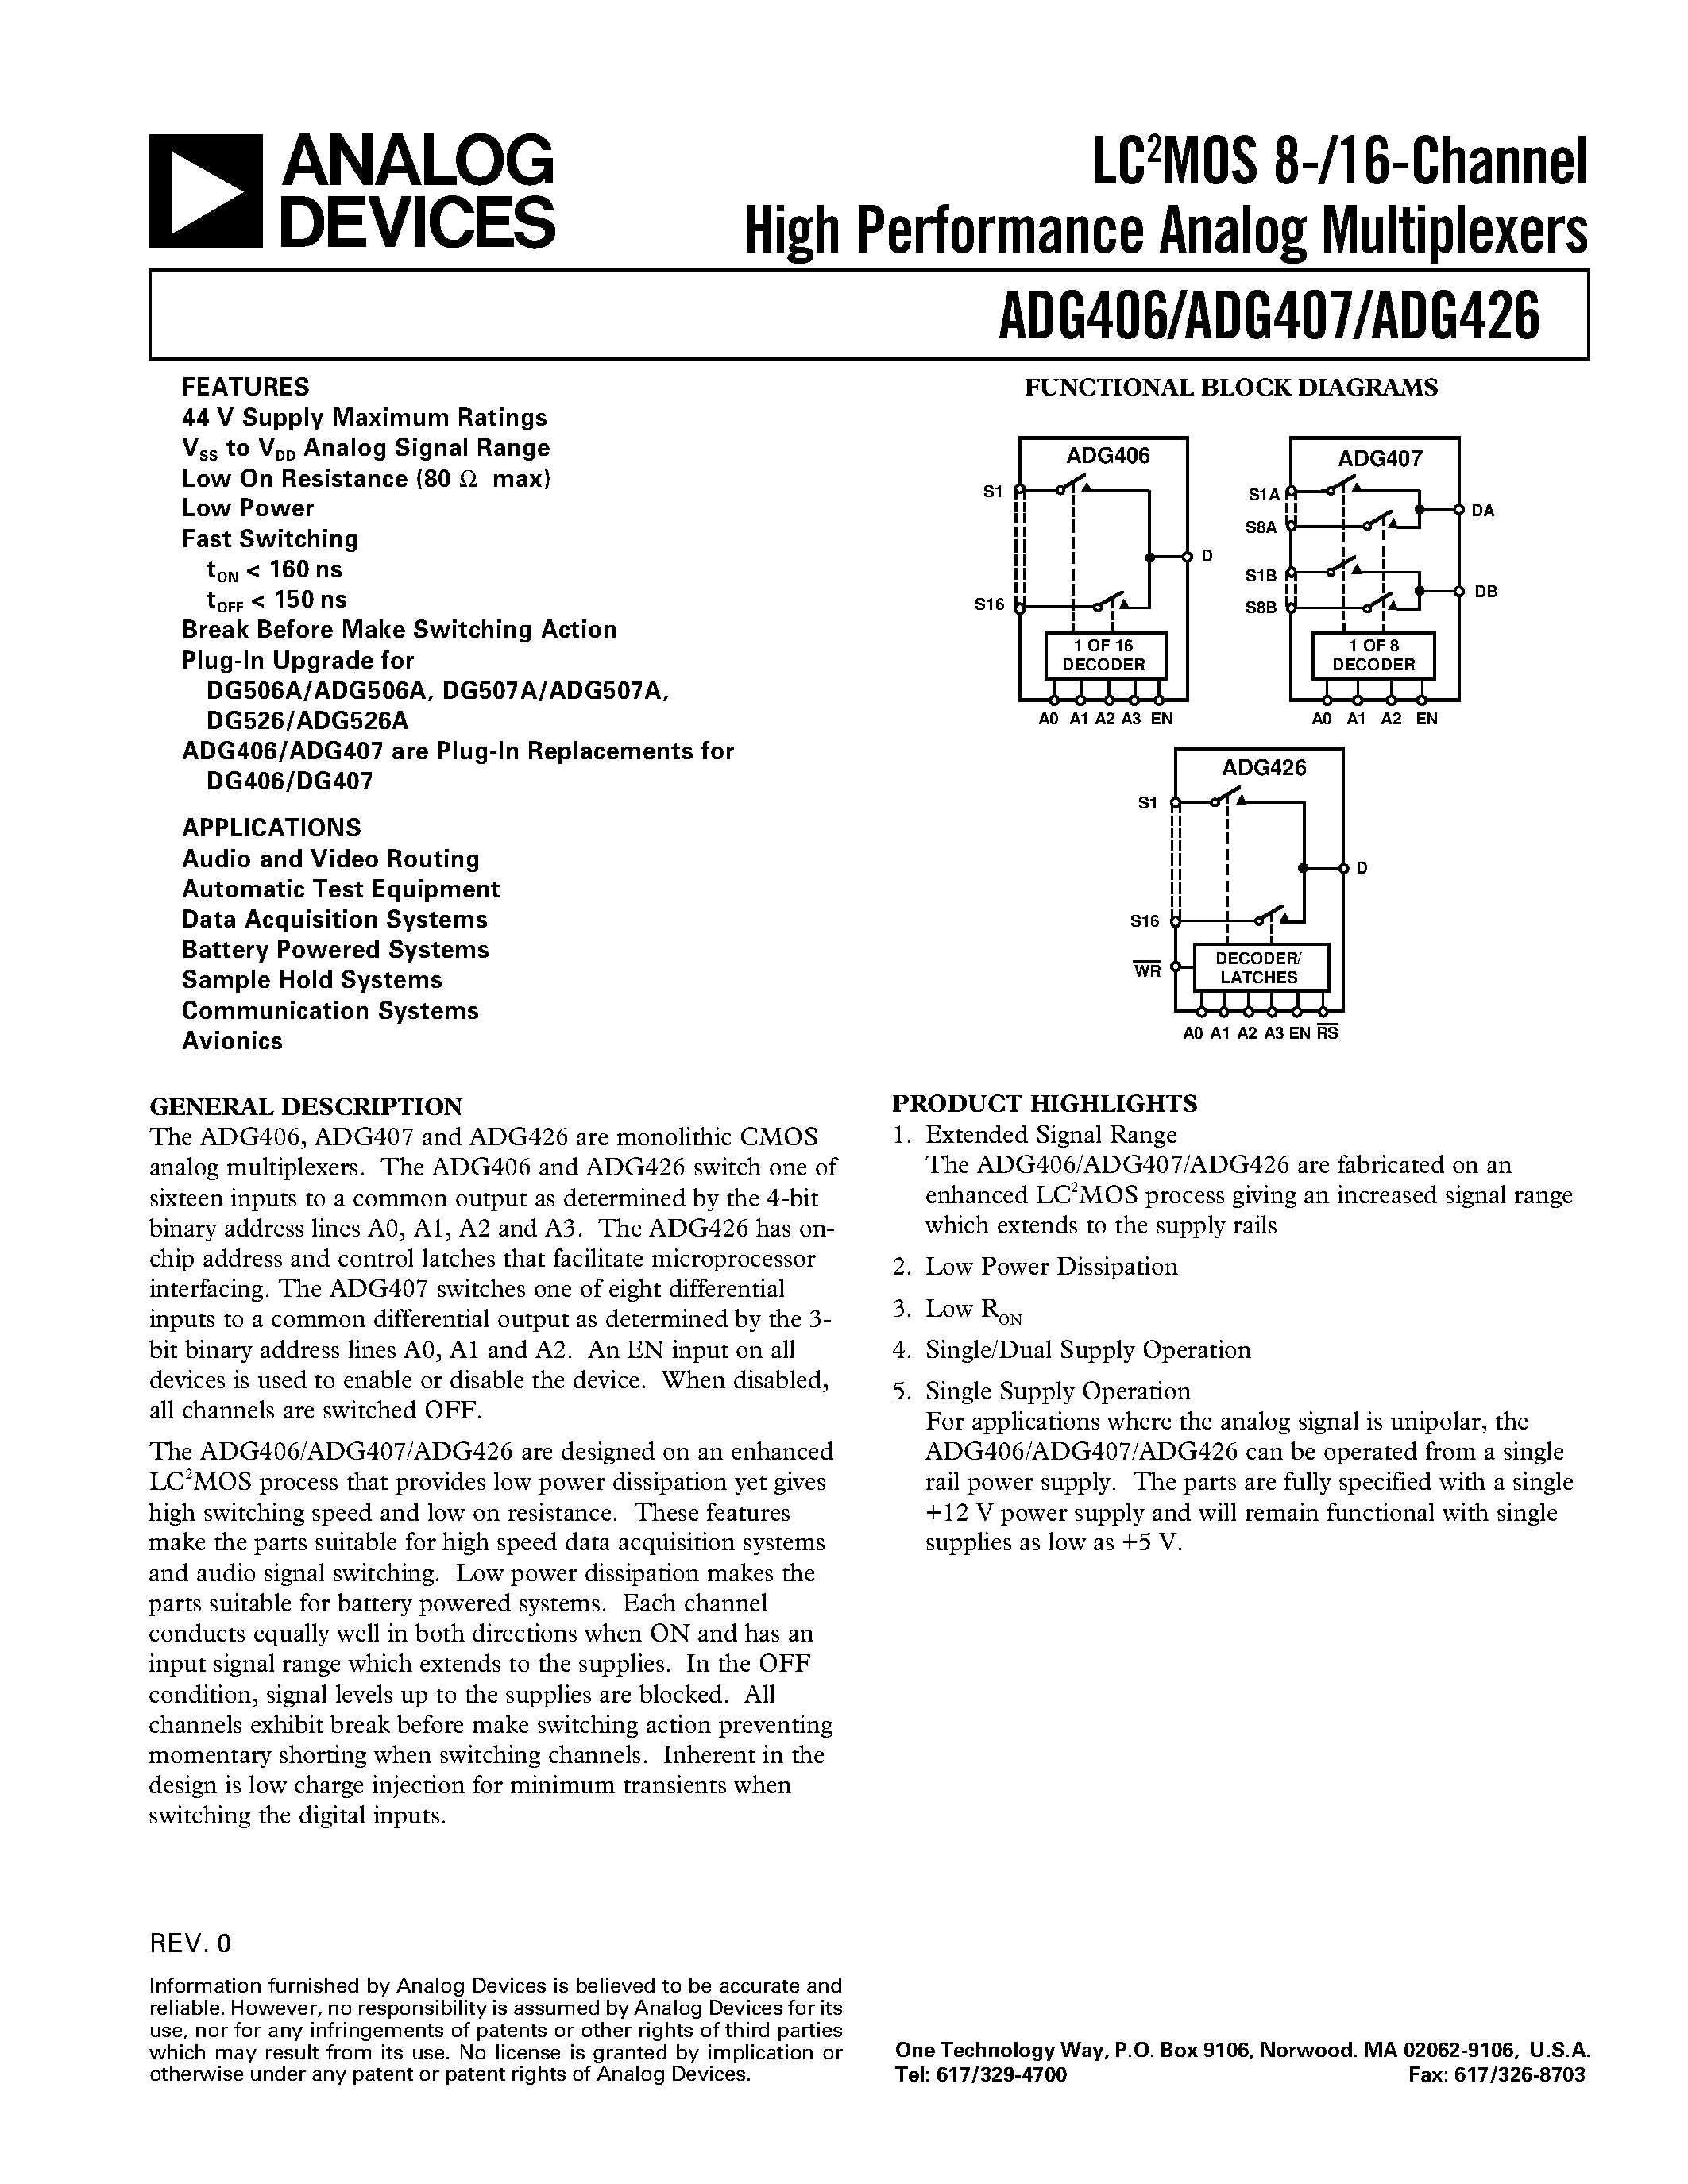 Даташит ADG407BP - LC2MOS 8-/16-Channel High Performance Analog Multiplexers страница 1